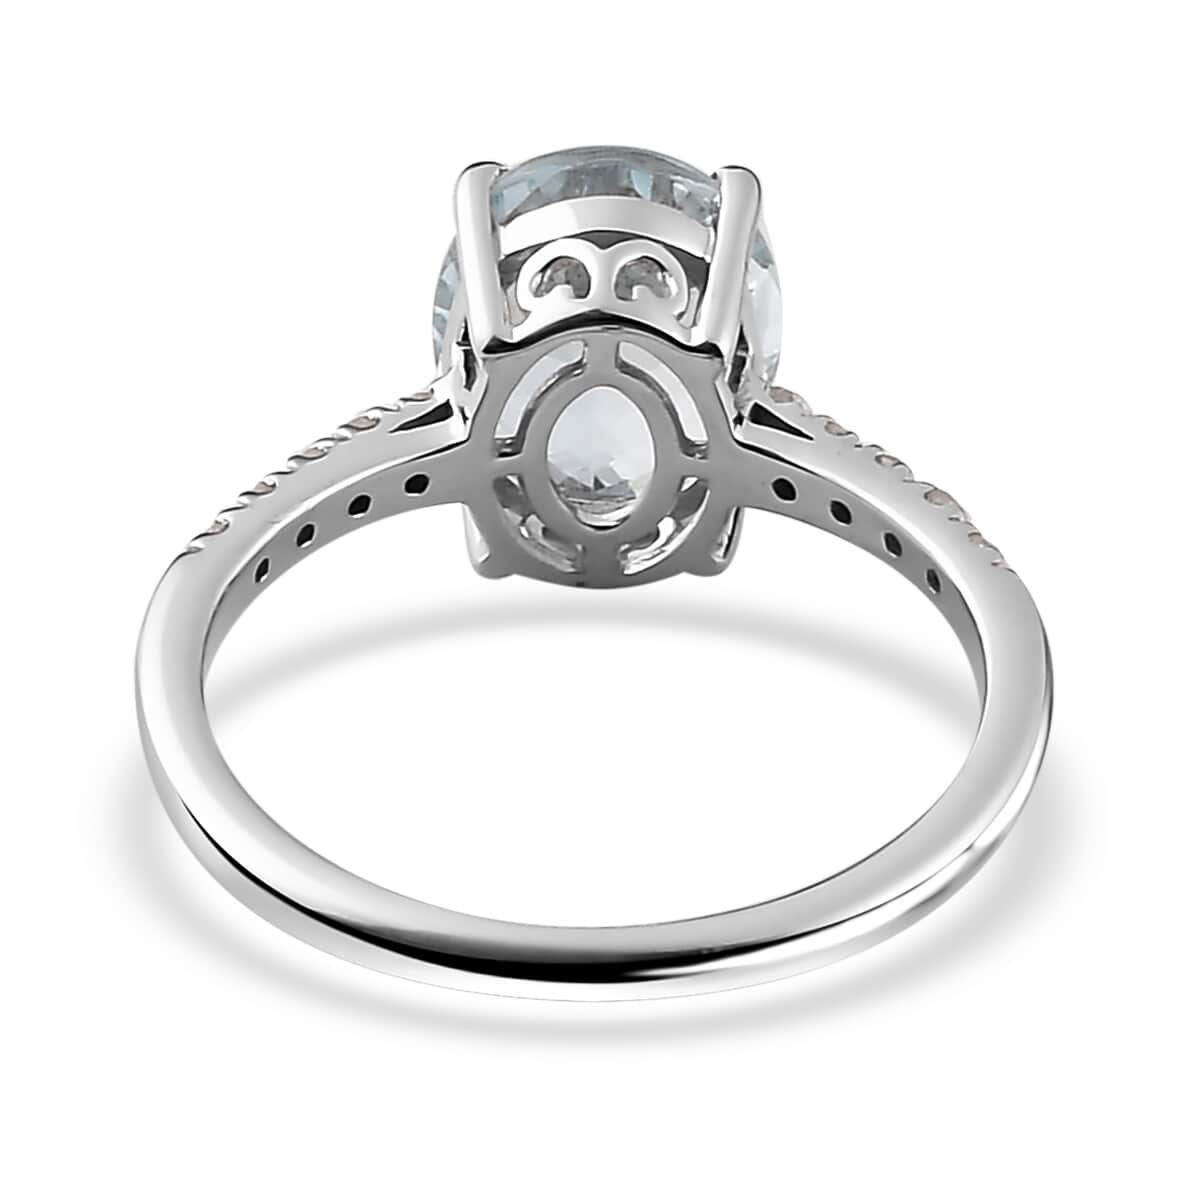 Premium Mangoro Aquamarine, Diamond (0.15 cts) Ring in Platinum Over Sterling Silver (Size 10.0) 2.40 ctw image number 4